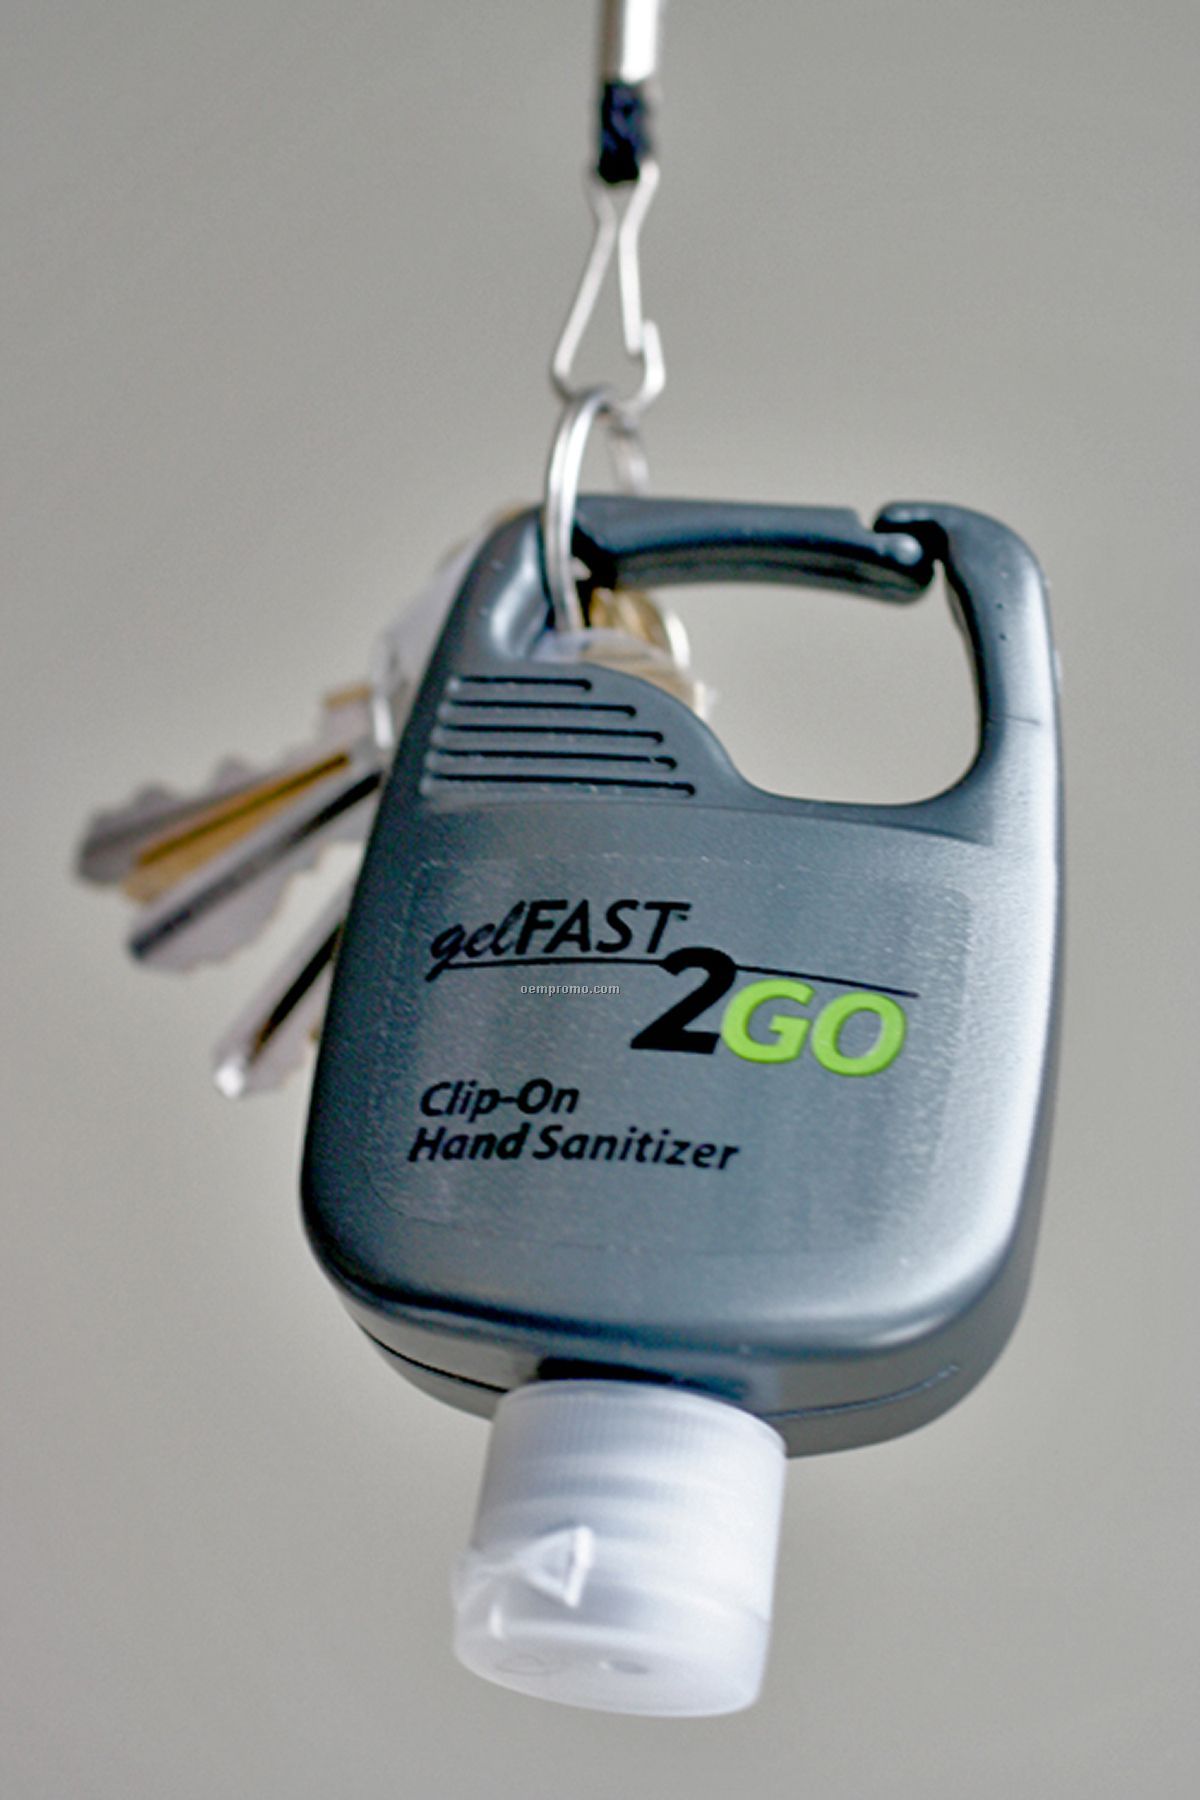 Gelfast 2go Hand Sanitizer - Metallic Charcoal Grey